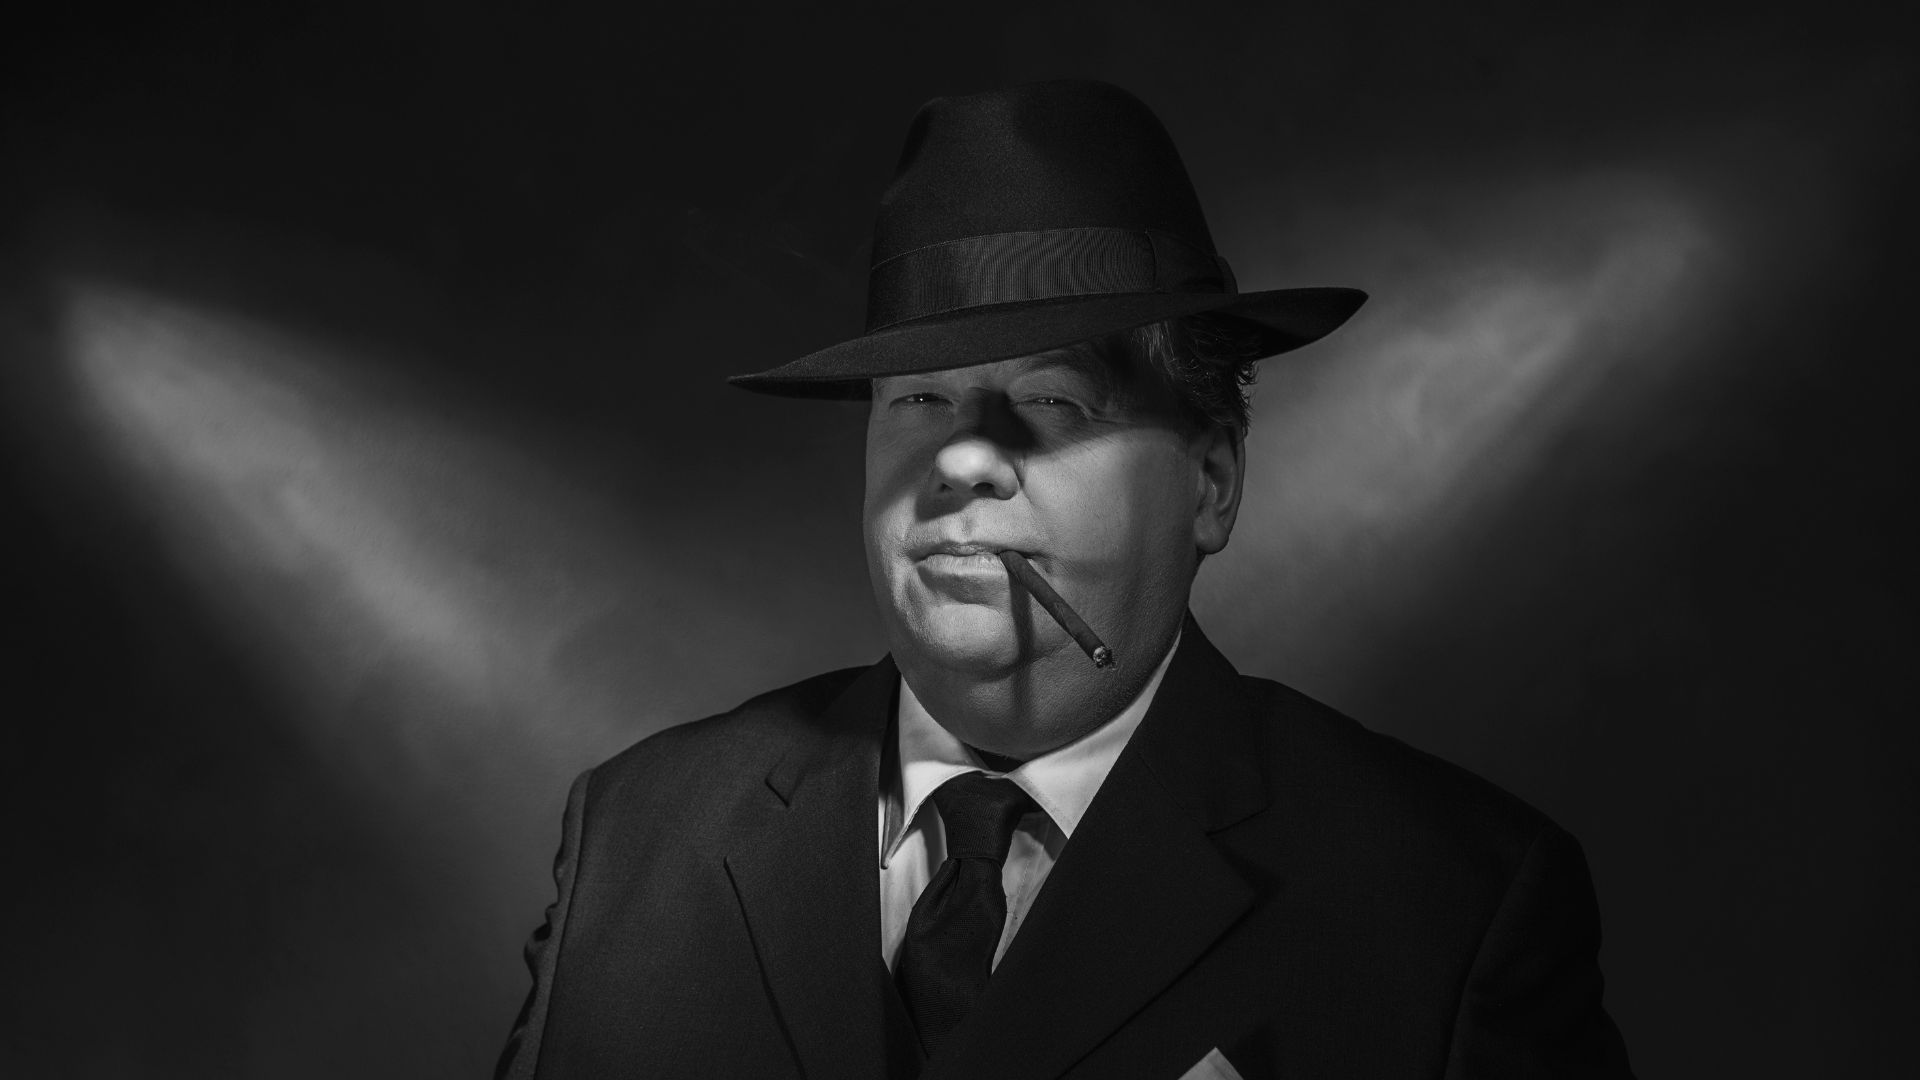 Retro 1930s gangster smoking cigar. Classic black and white portrait.